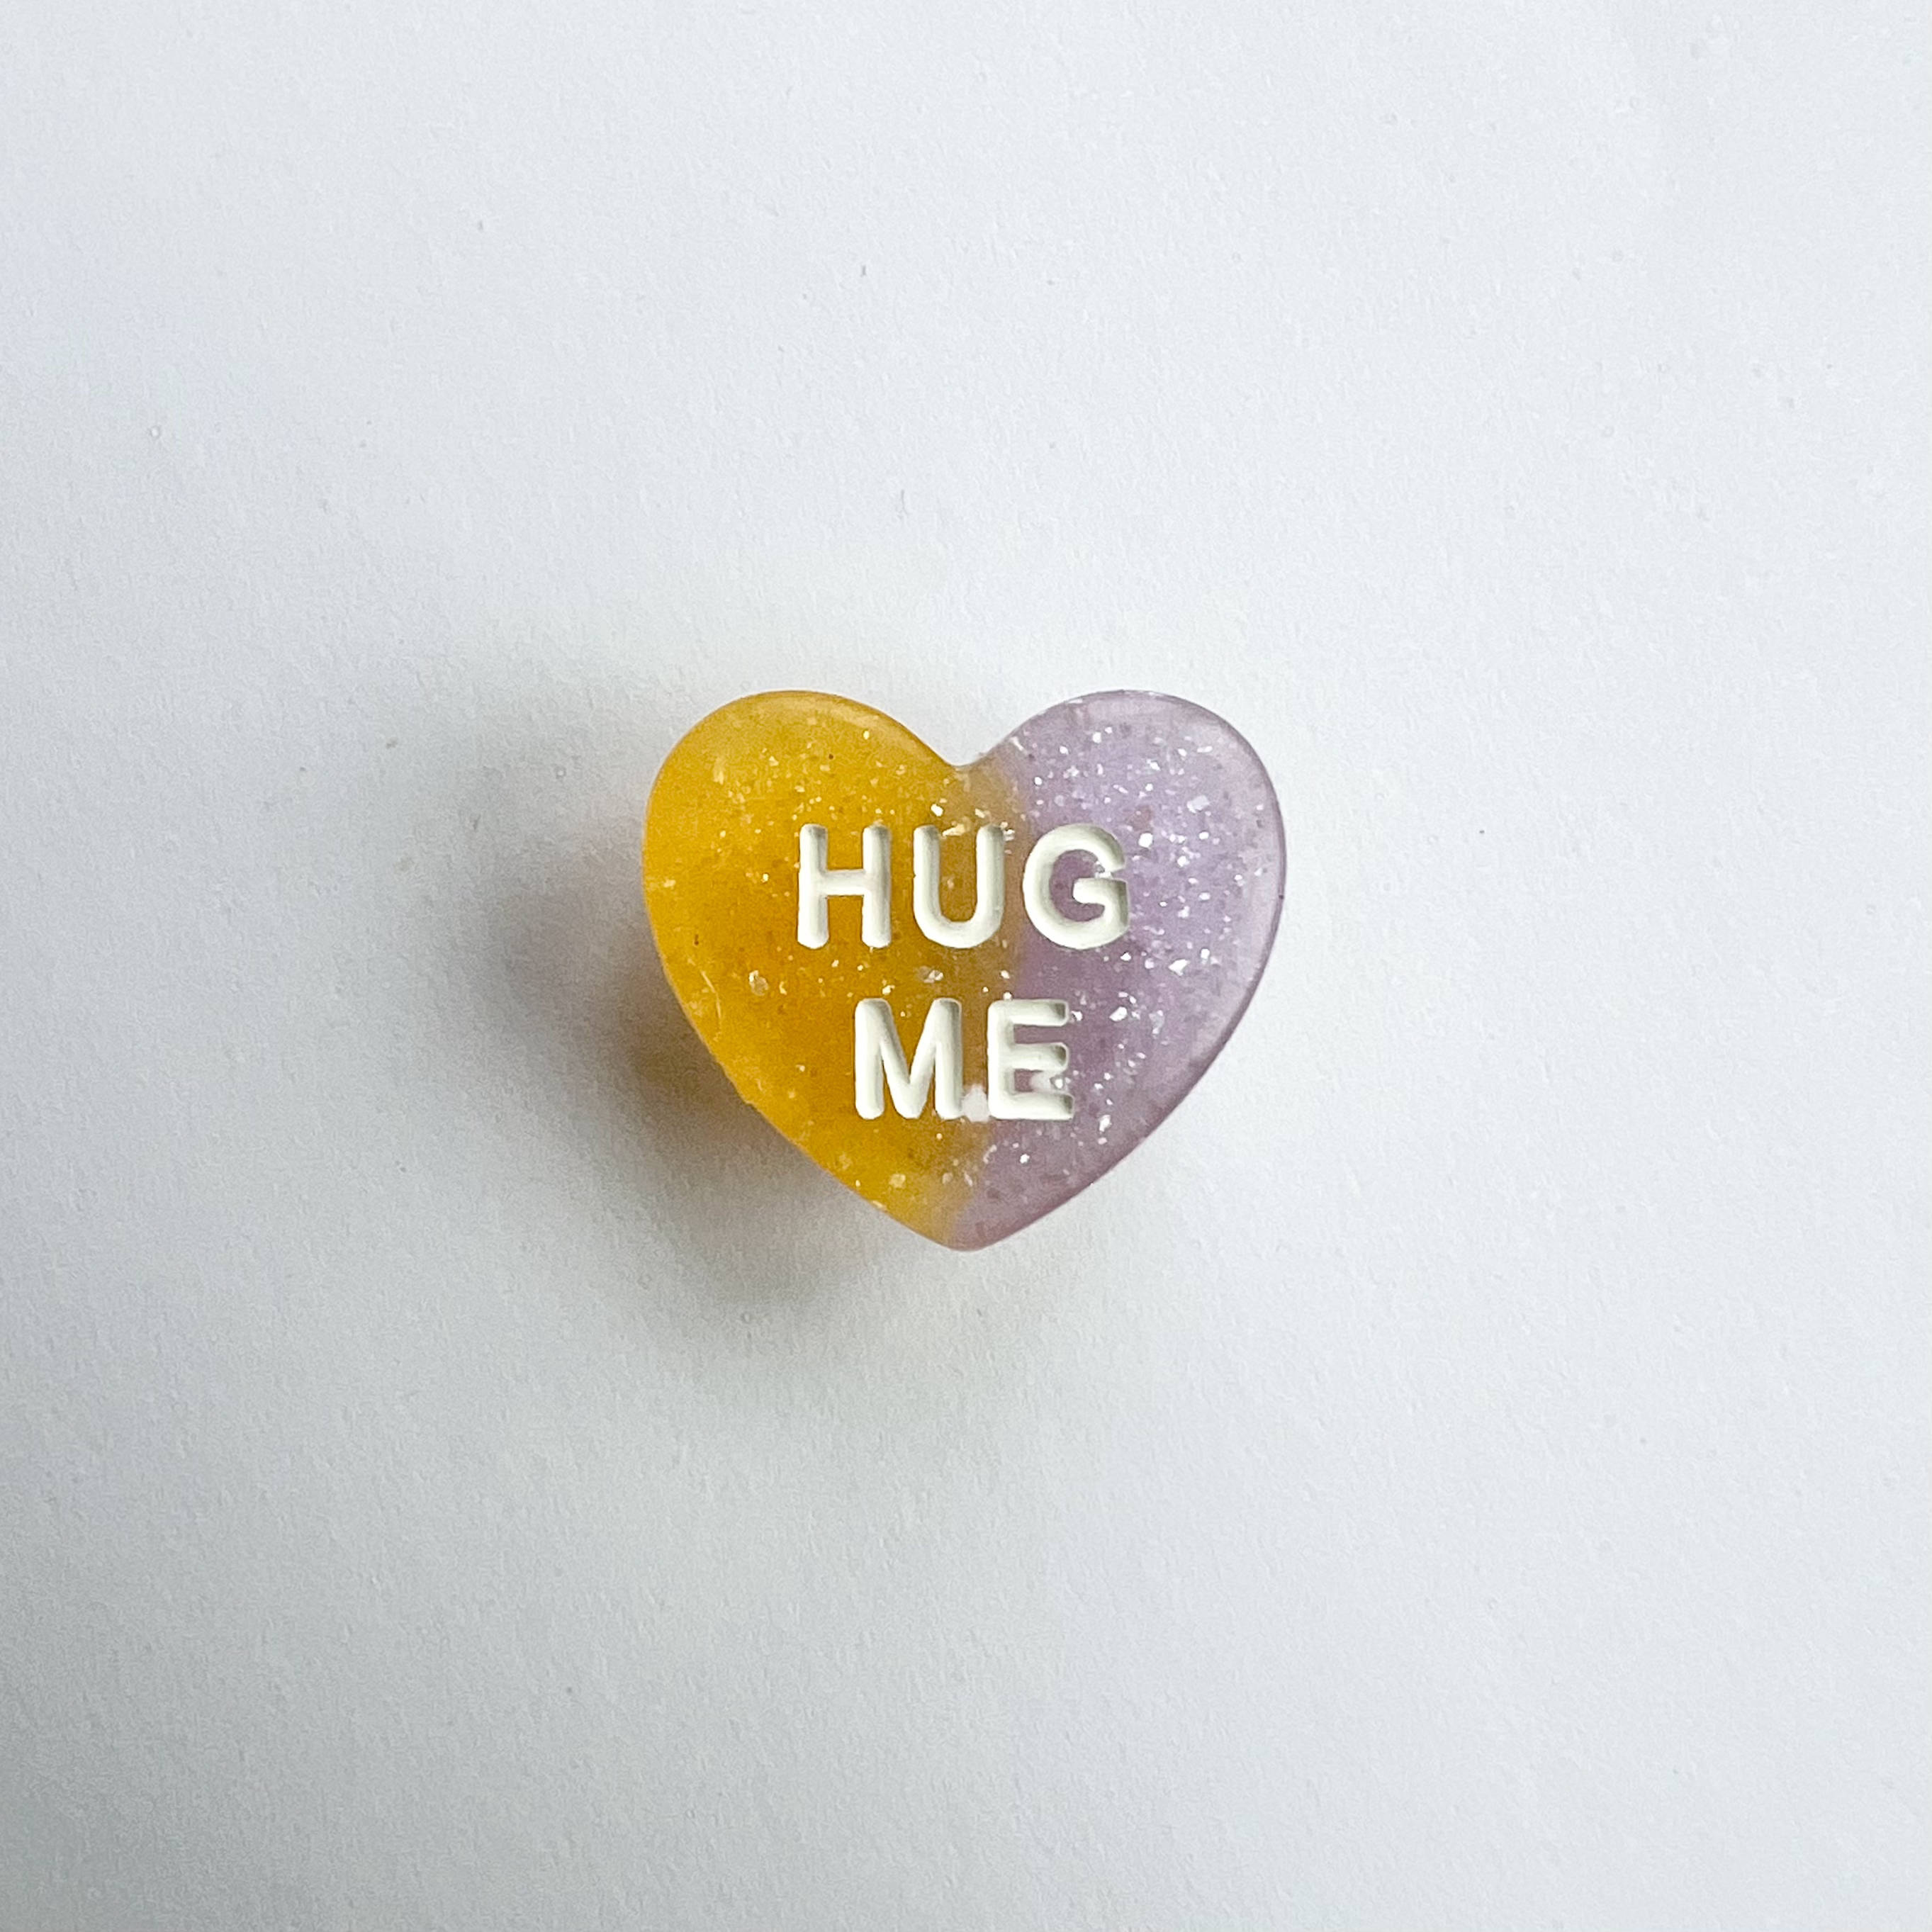 Hug Me Candy Heart - Glitter Yellow/Purple Charm